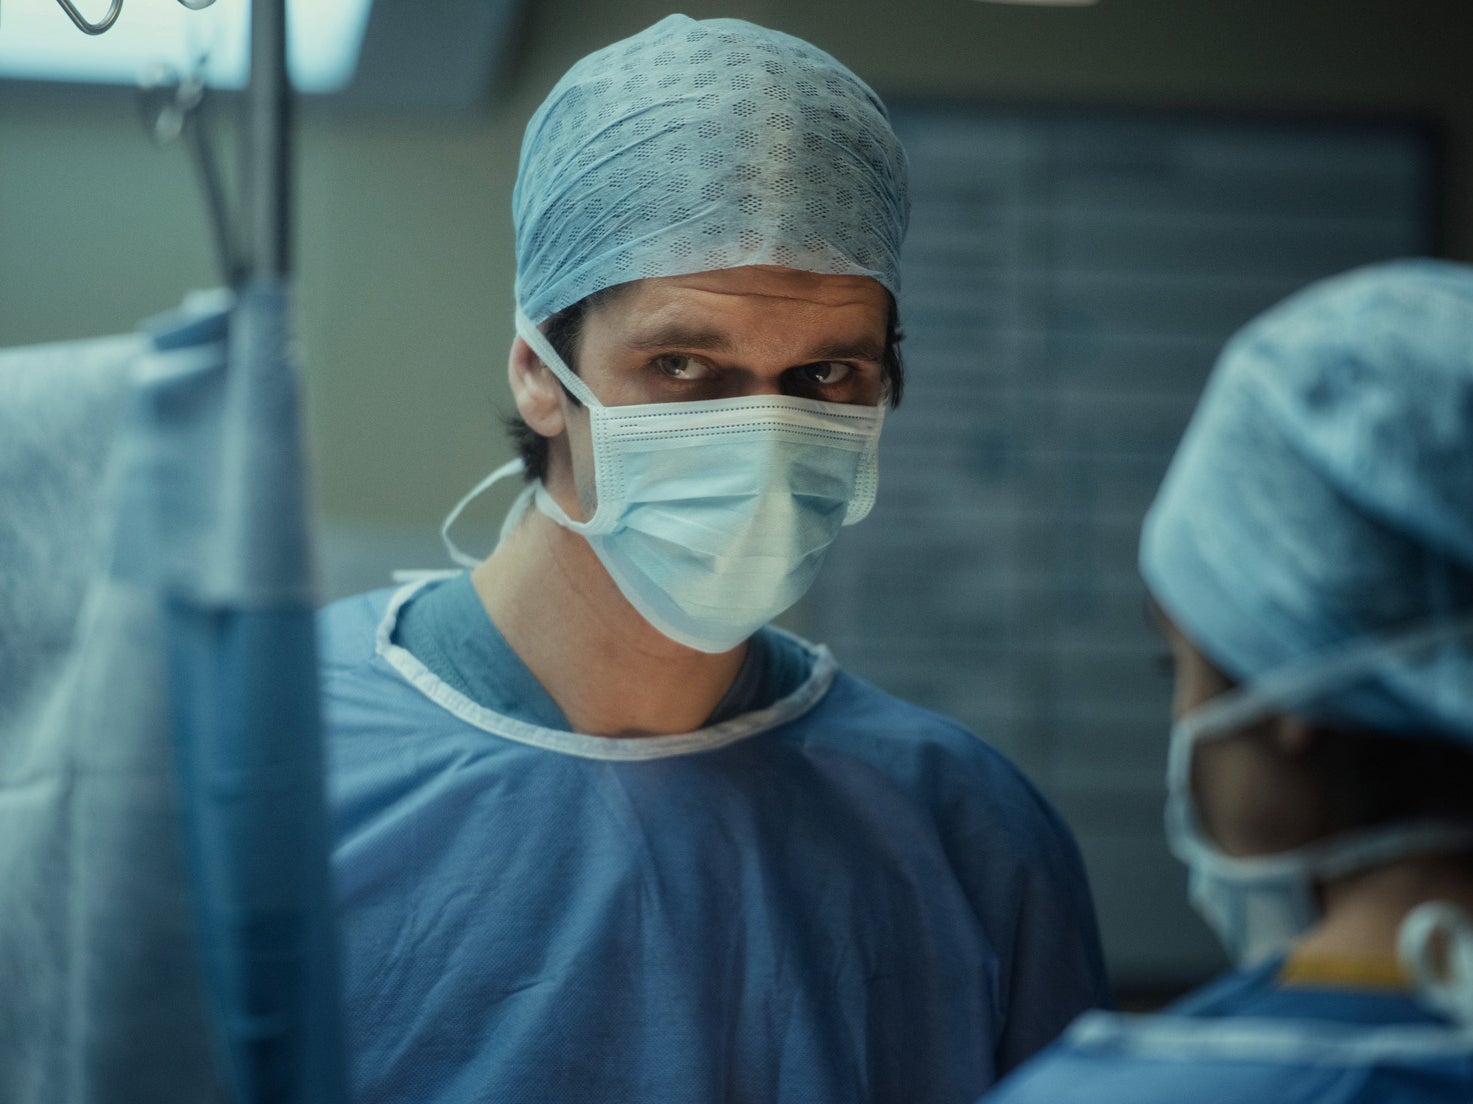 amateur transplants careless surgeon